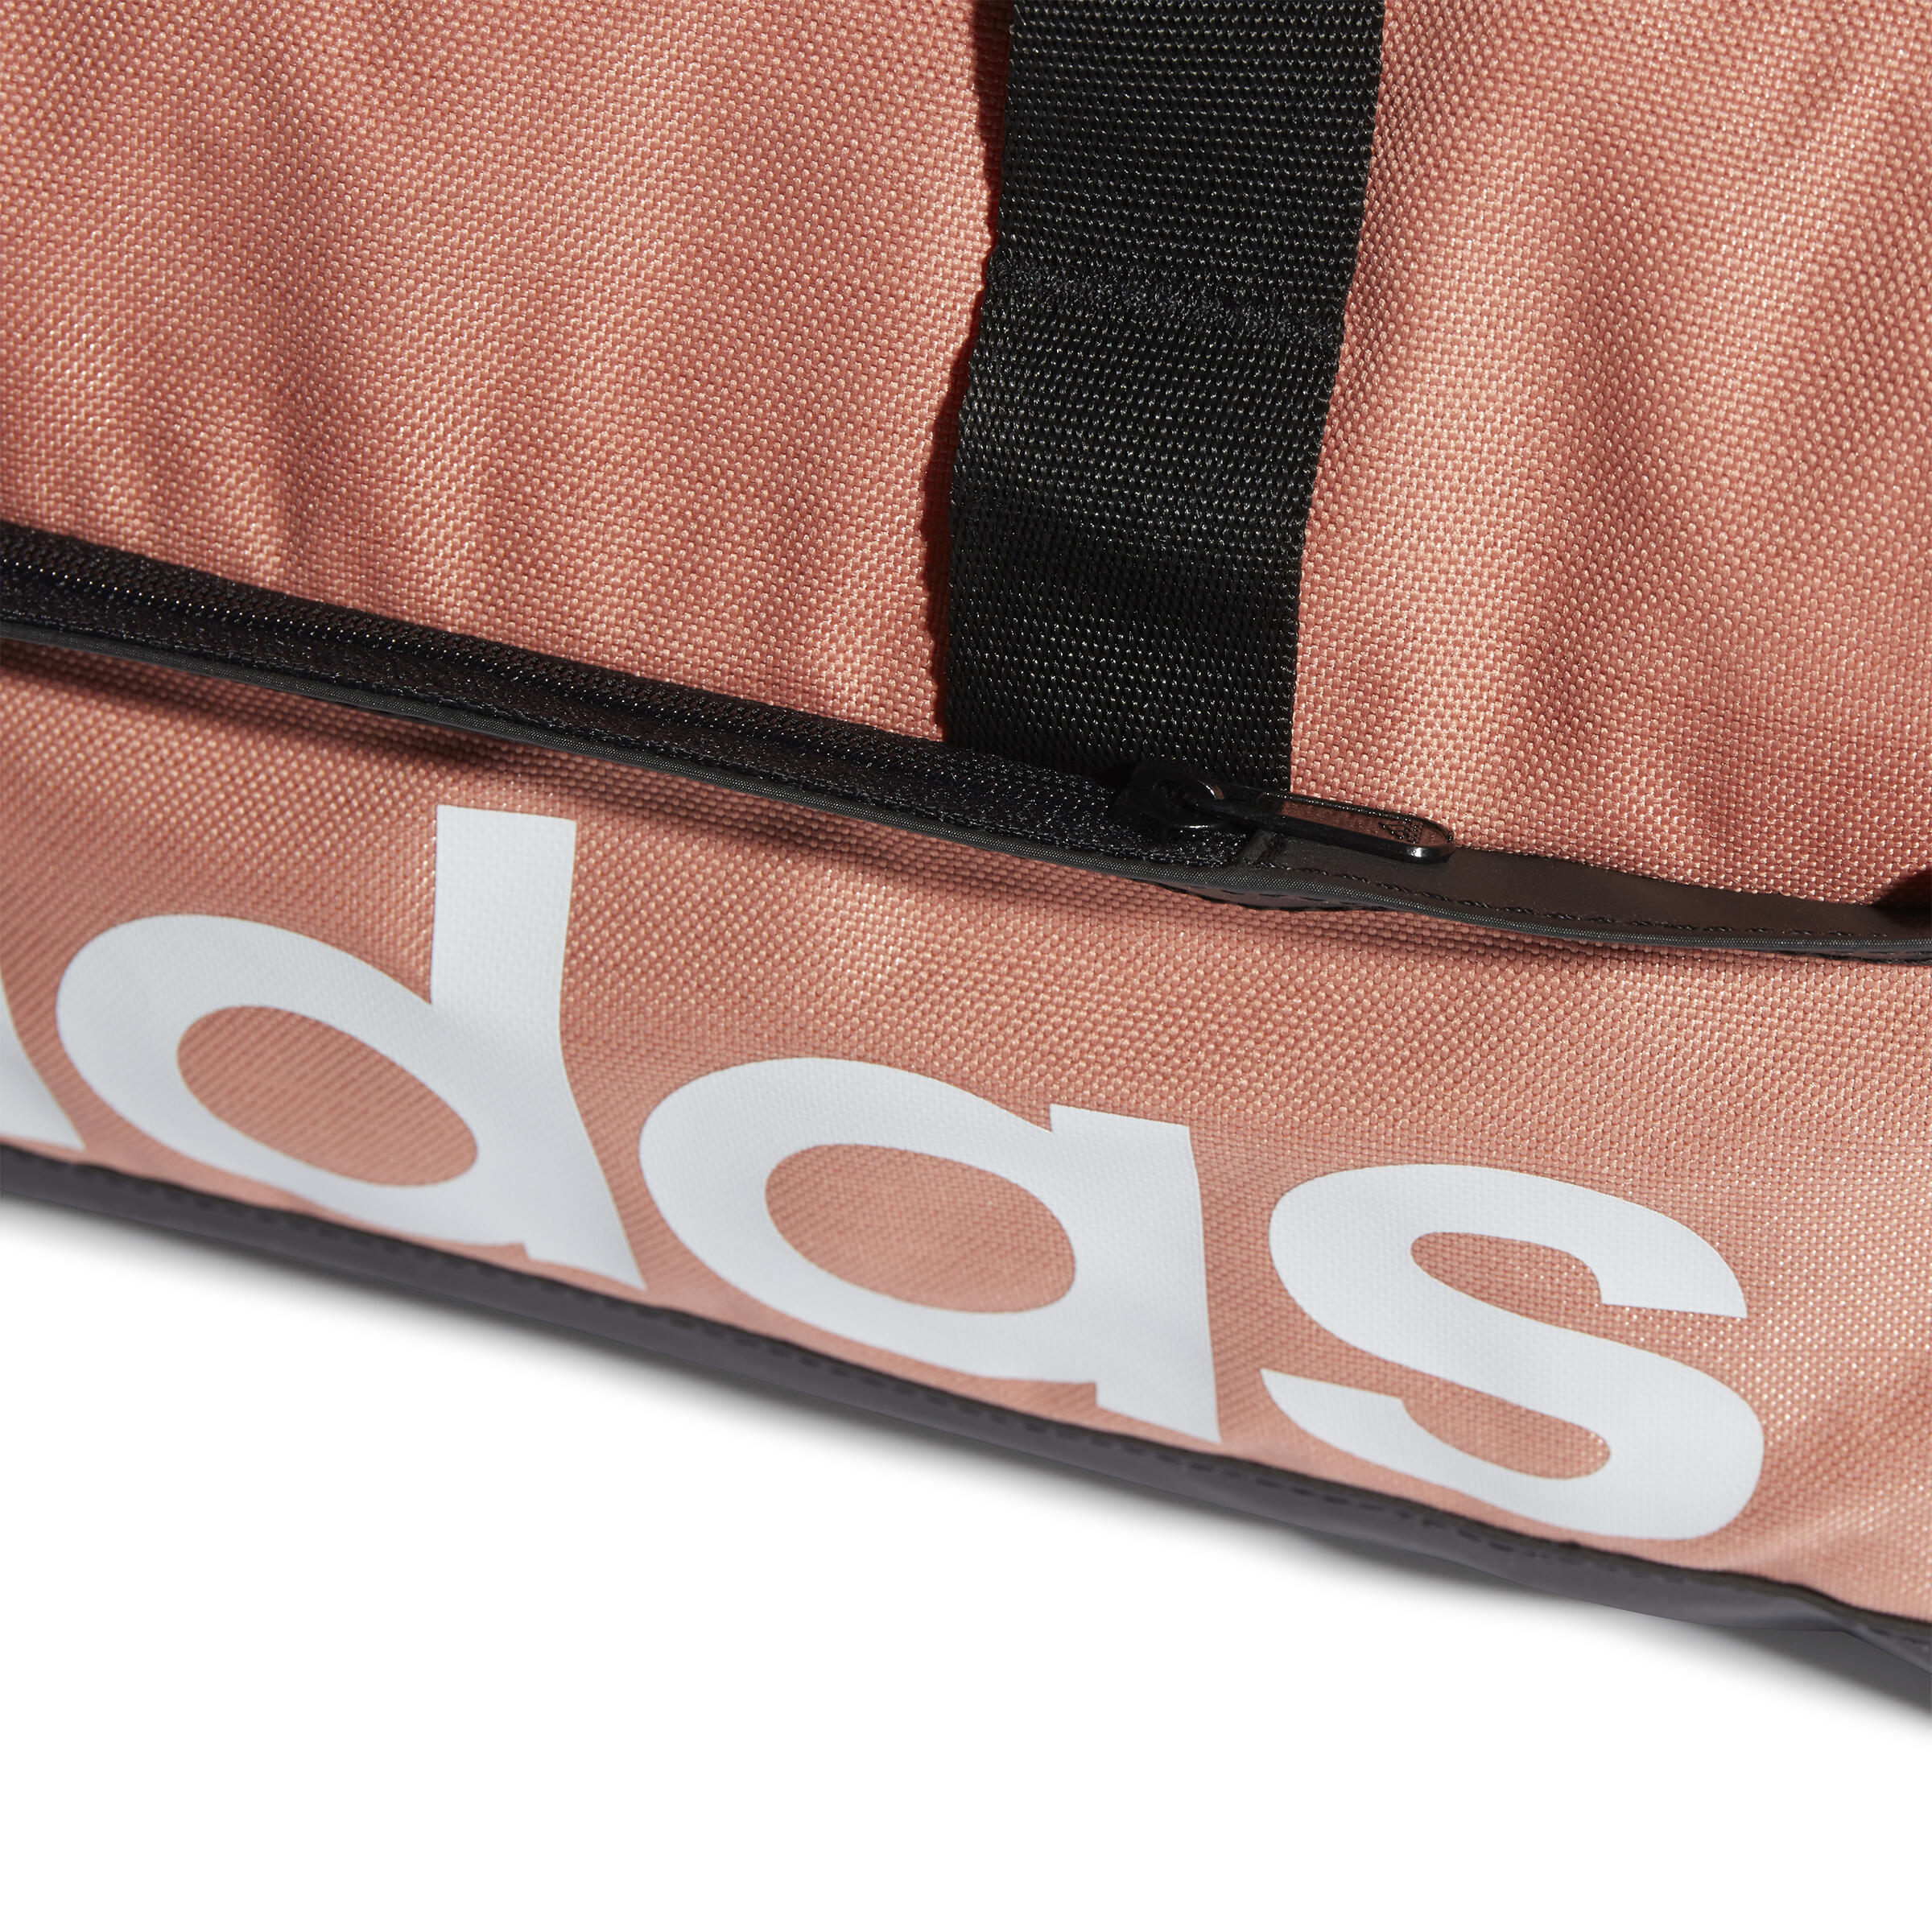 adidas 4ATHLTS Small Duffel Bag in Black - Intersport Australia